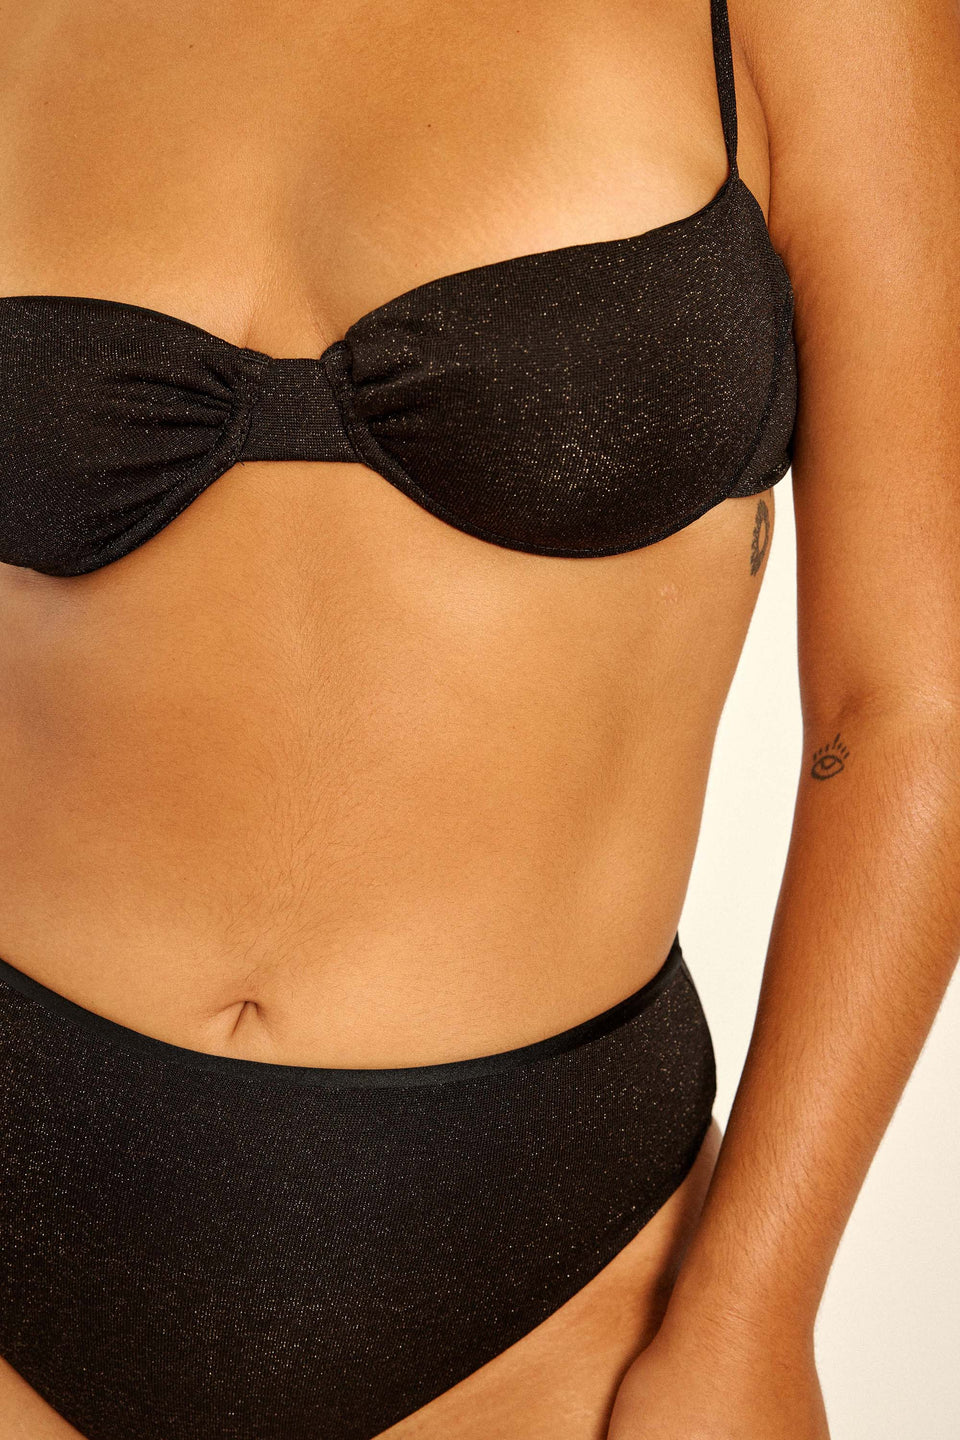 Great flattering fit Bikini two piece worn as top by plus size XL beautiful curvy model.